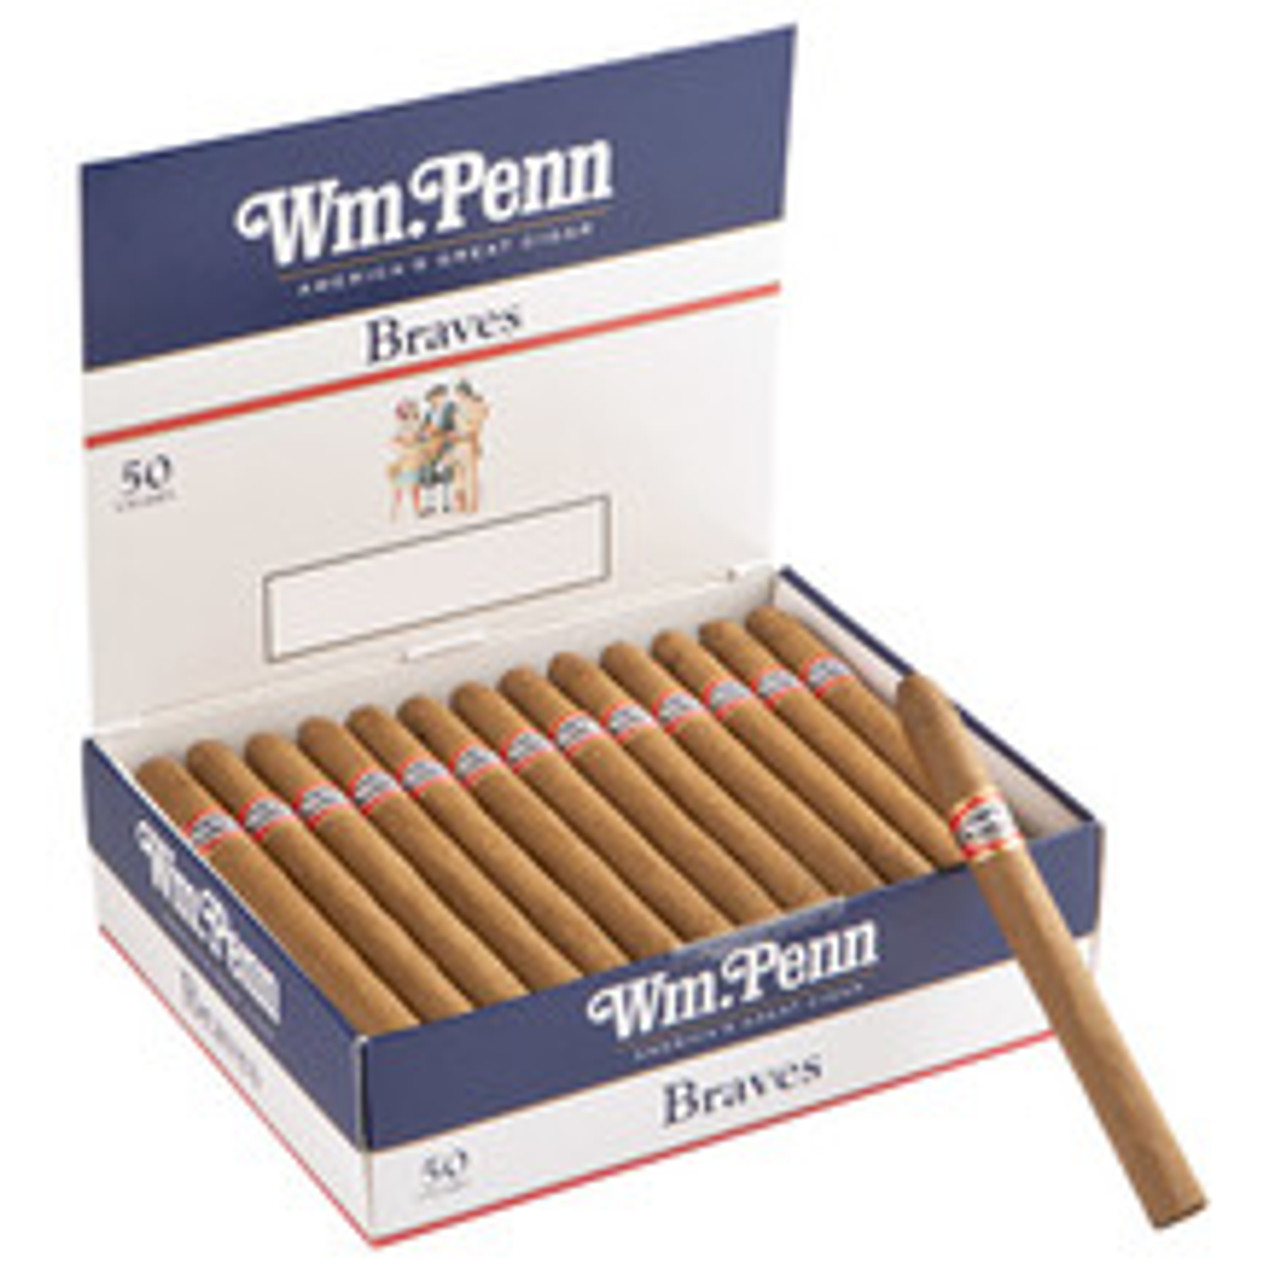 William Penn Brave Cigars - 4.69 x 28 (Box of 50) Open